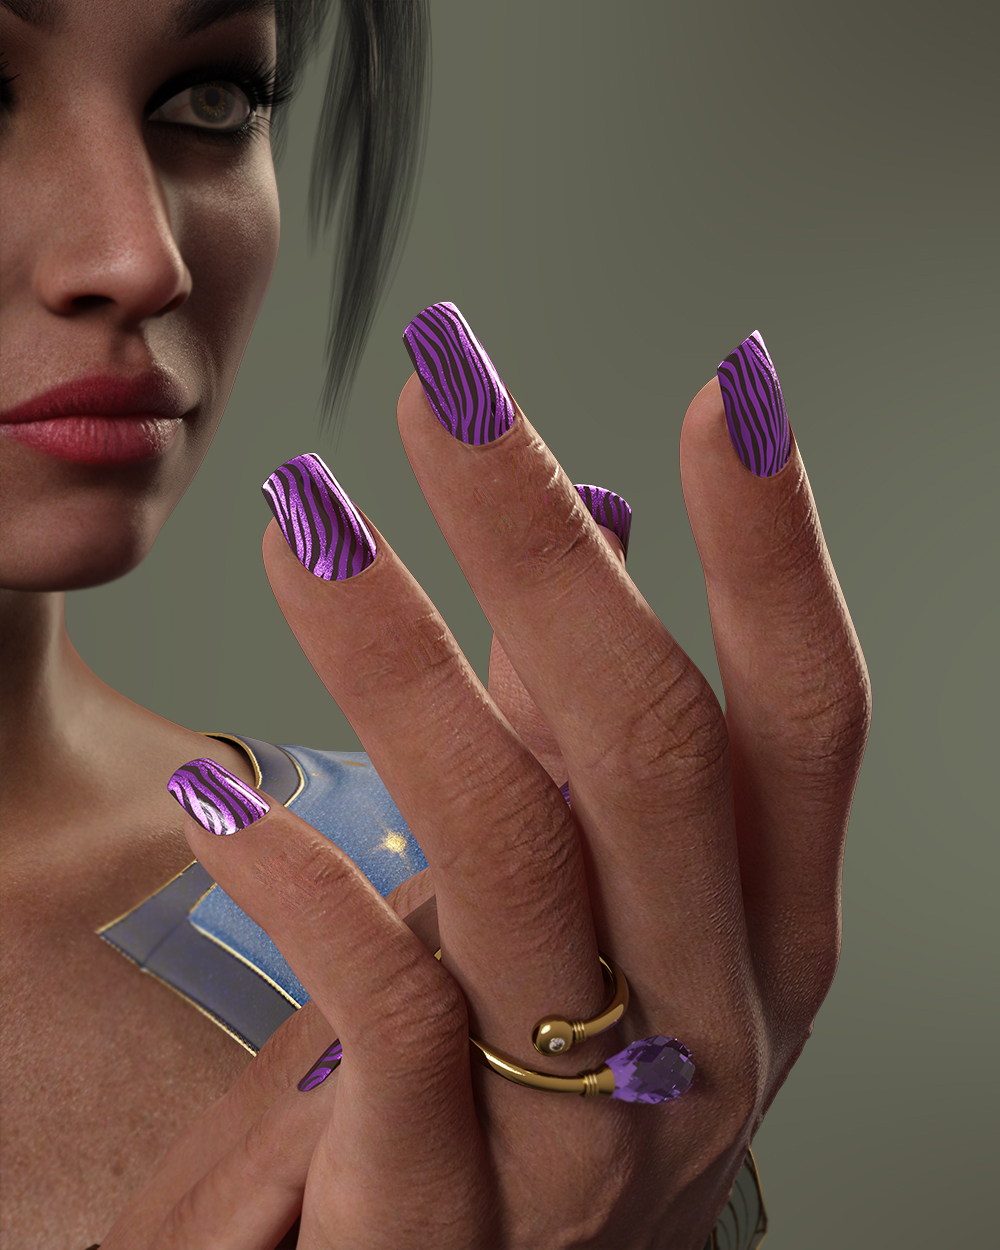 TMHL Nails 2 Merchant Resource for Genesis 8.1 Female by: TwiztedMetalhotlilme74, 3D Models by Daz 3D